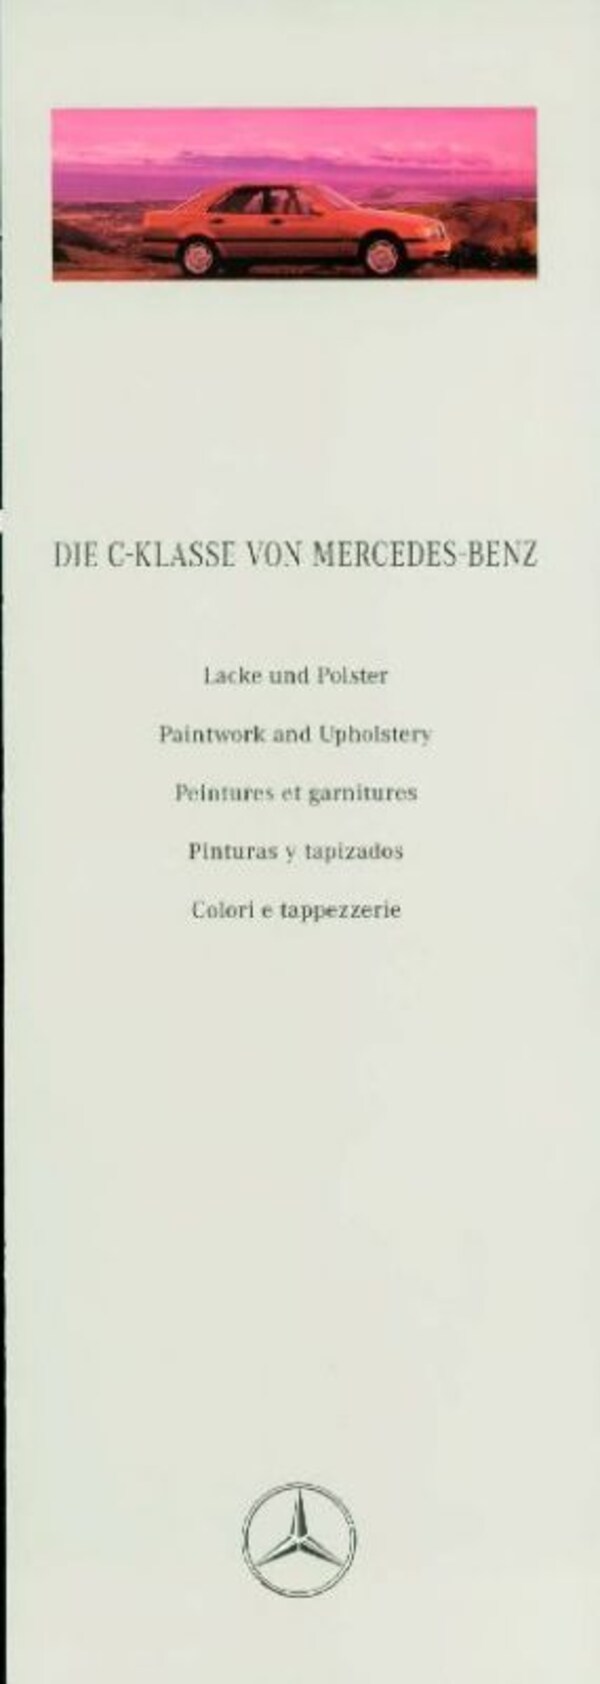 Brochure Mercedes-Benz C-klasse Lacke und Polster 